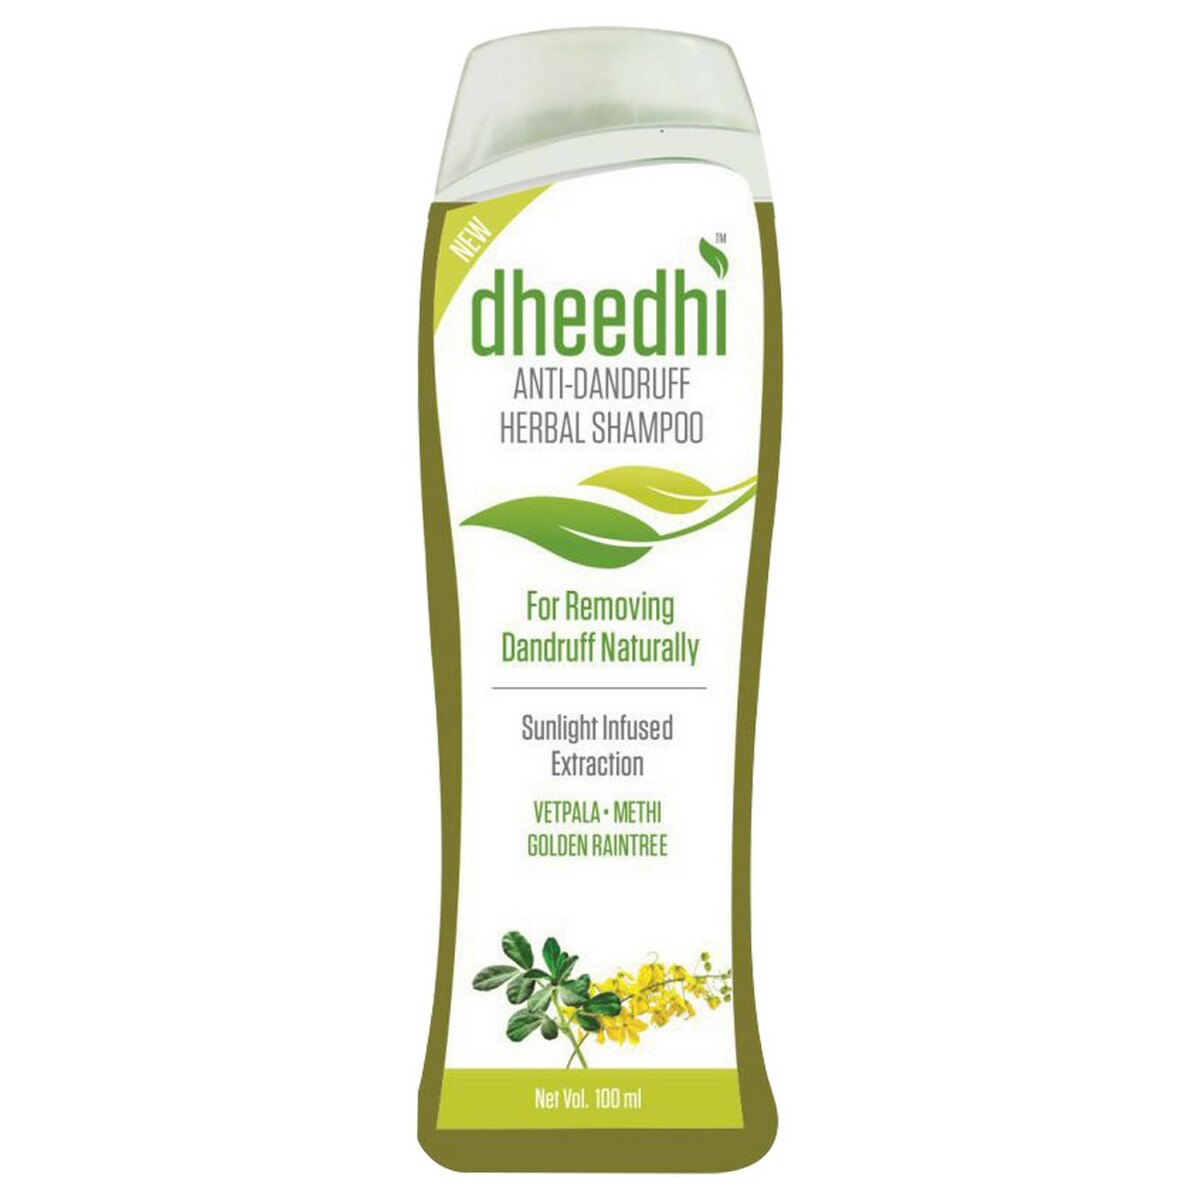 Dhathri Dheedhi Shampoo Anti Dandruff 100ml